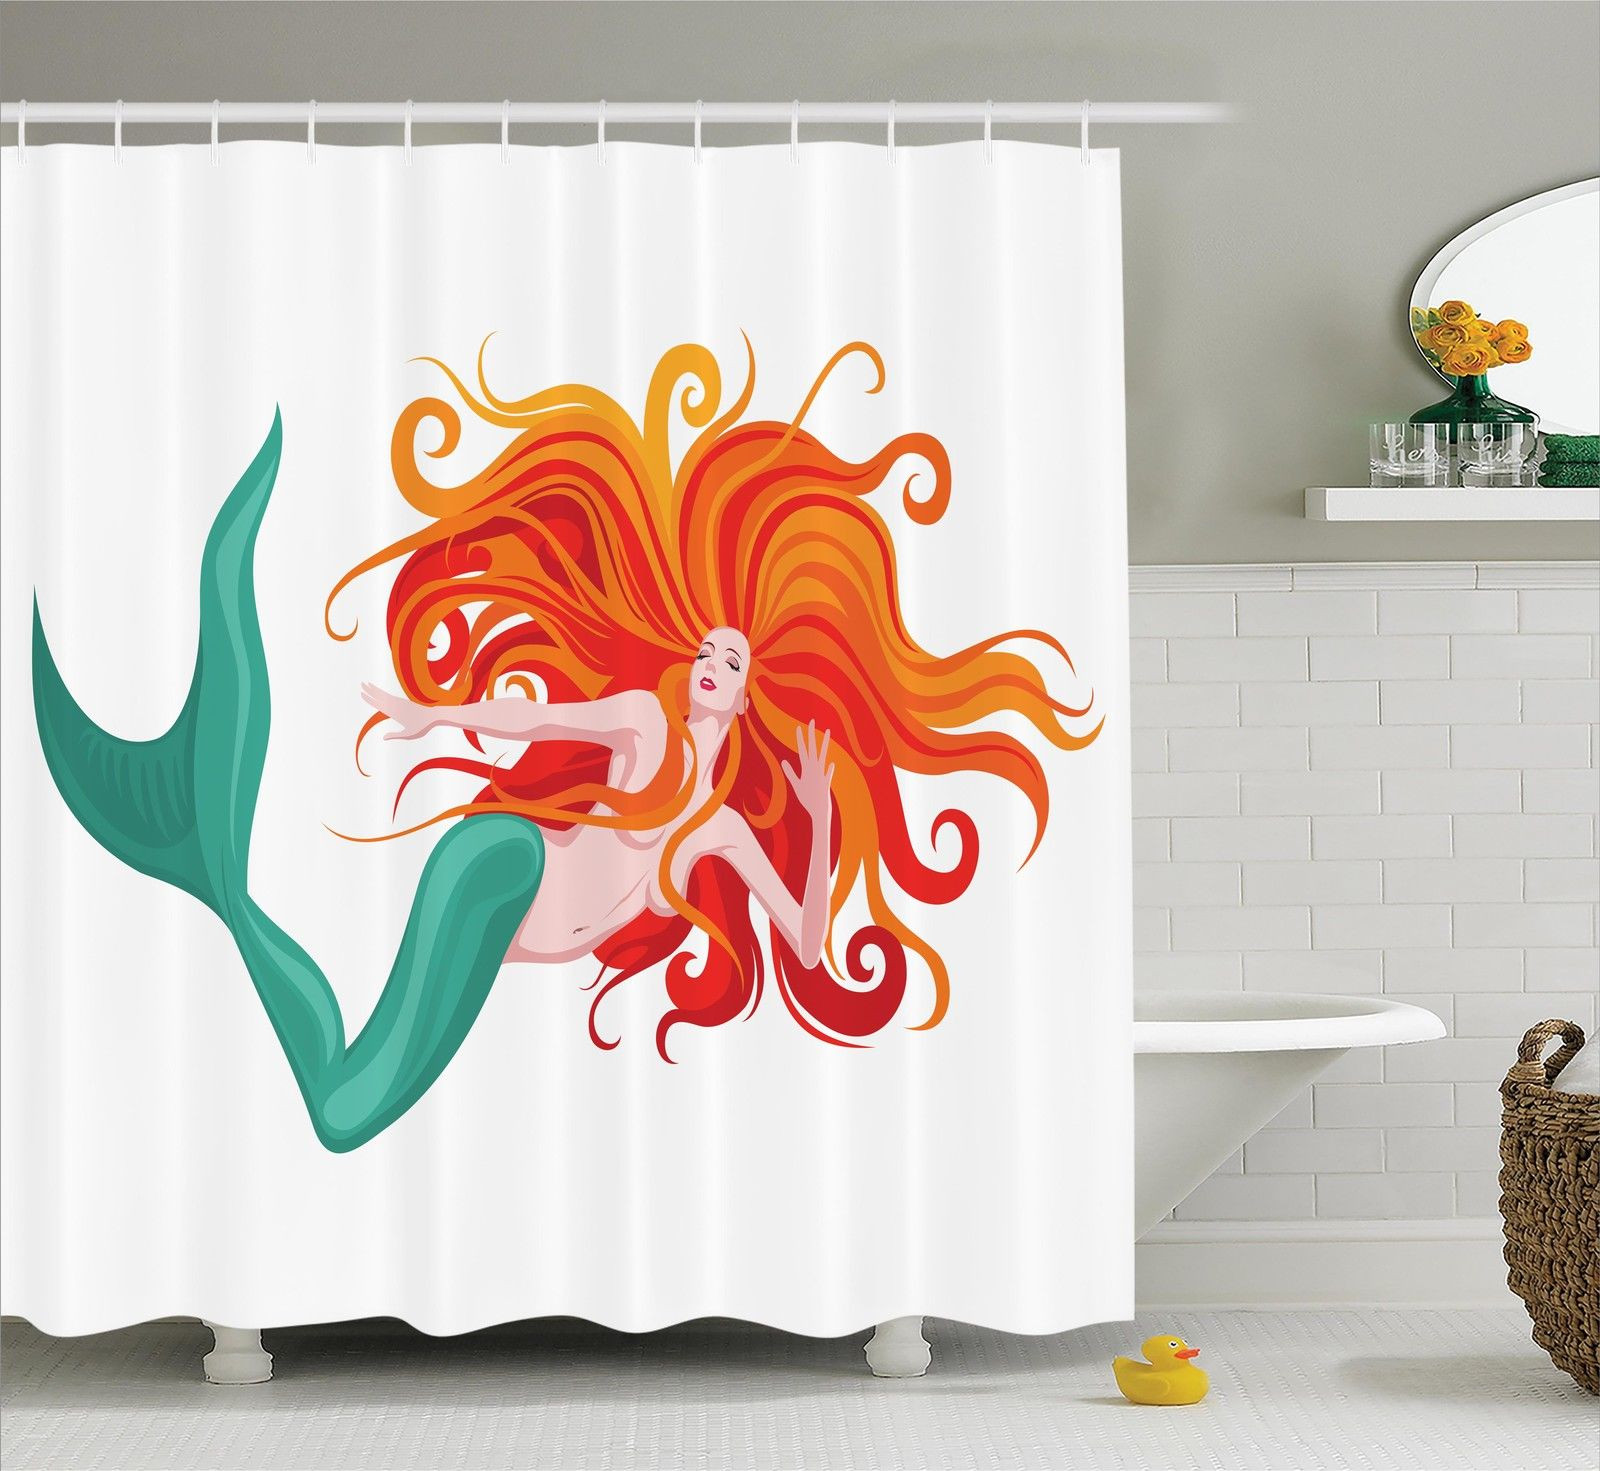 Mermaid Bathroom Decor
 Mermaid Decor Shower Curtain Set Illustration Red